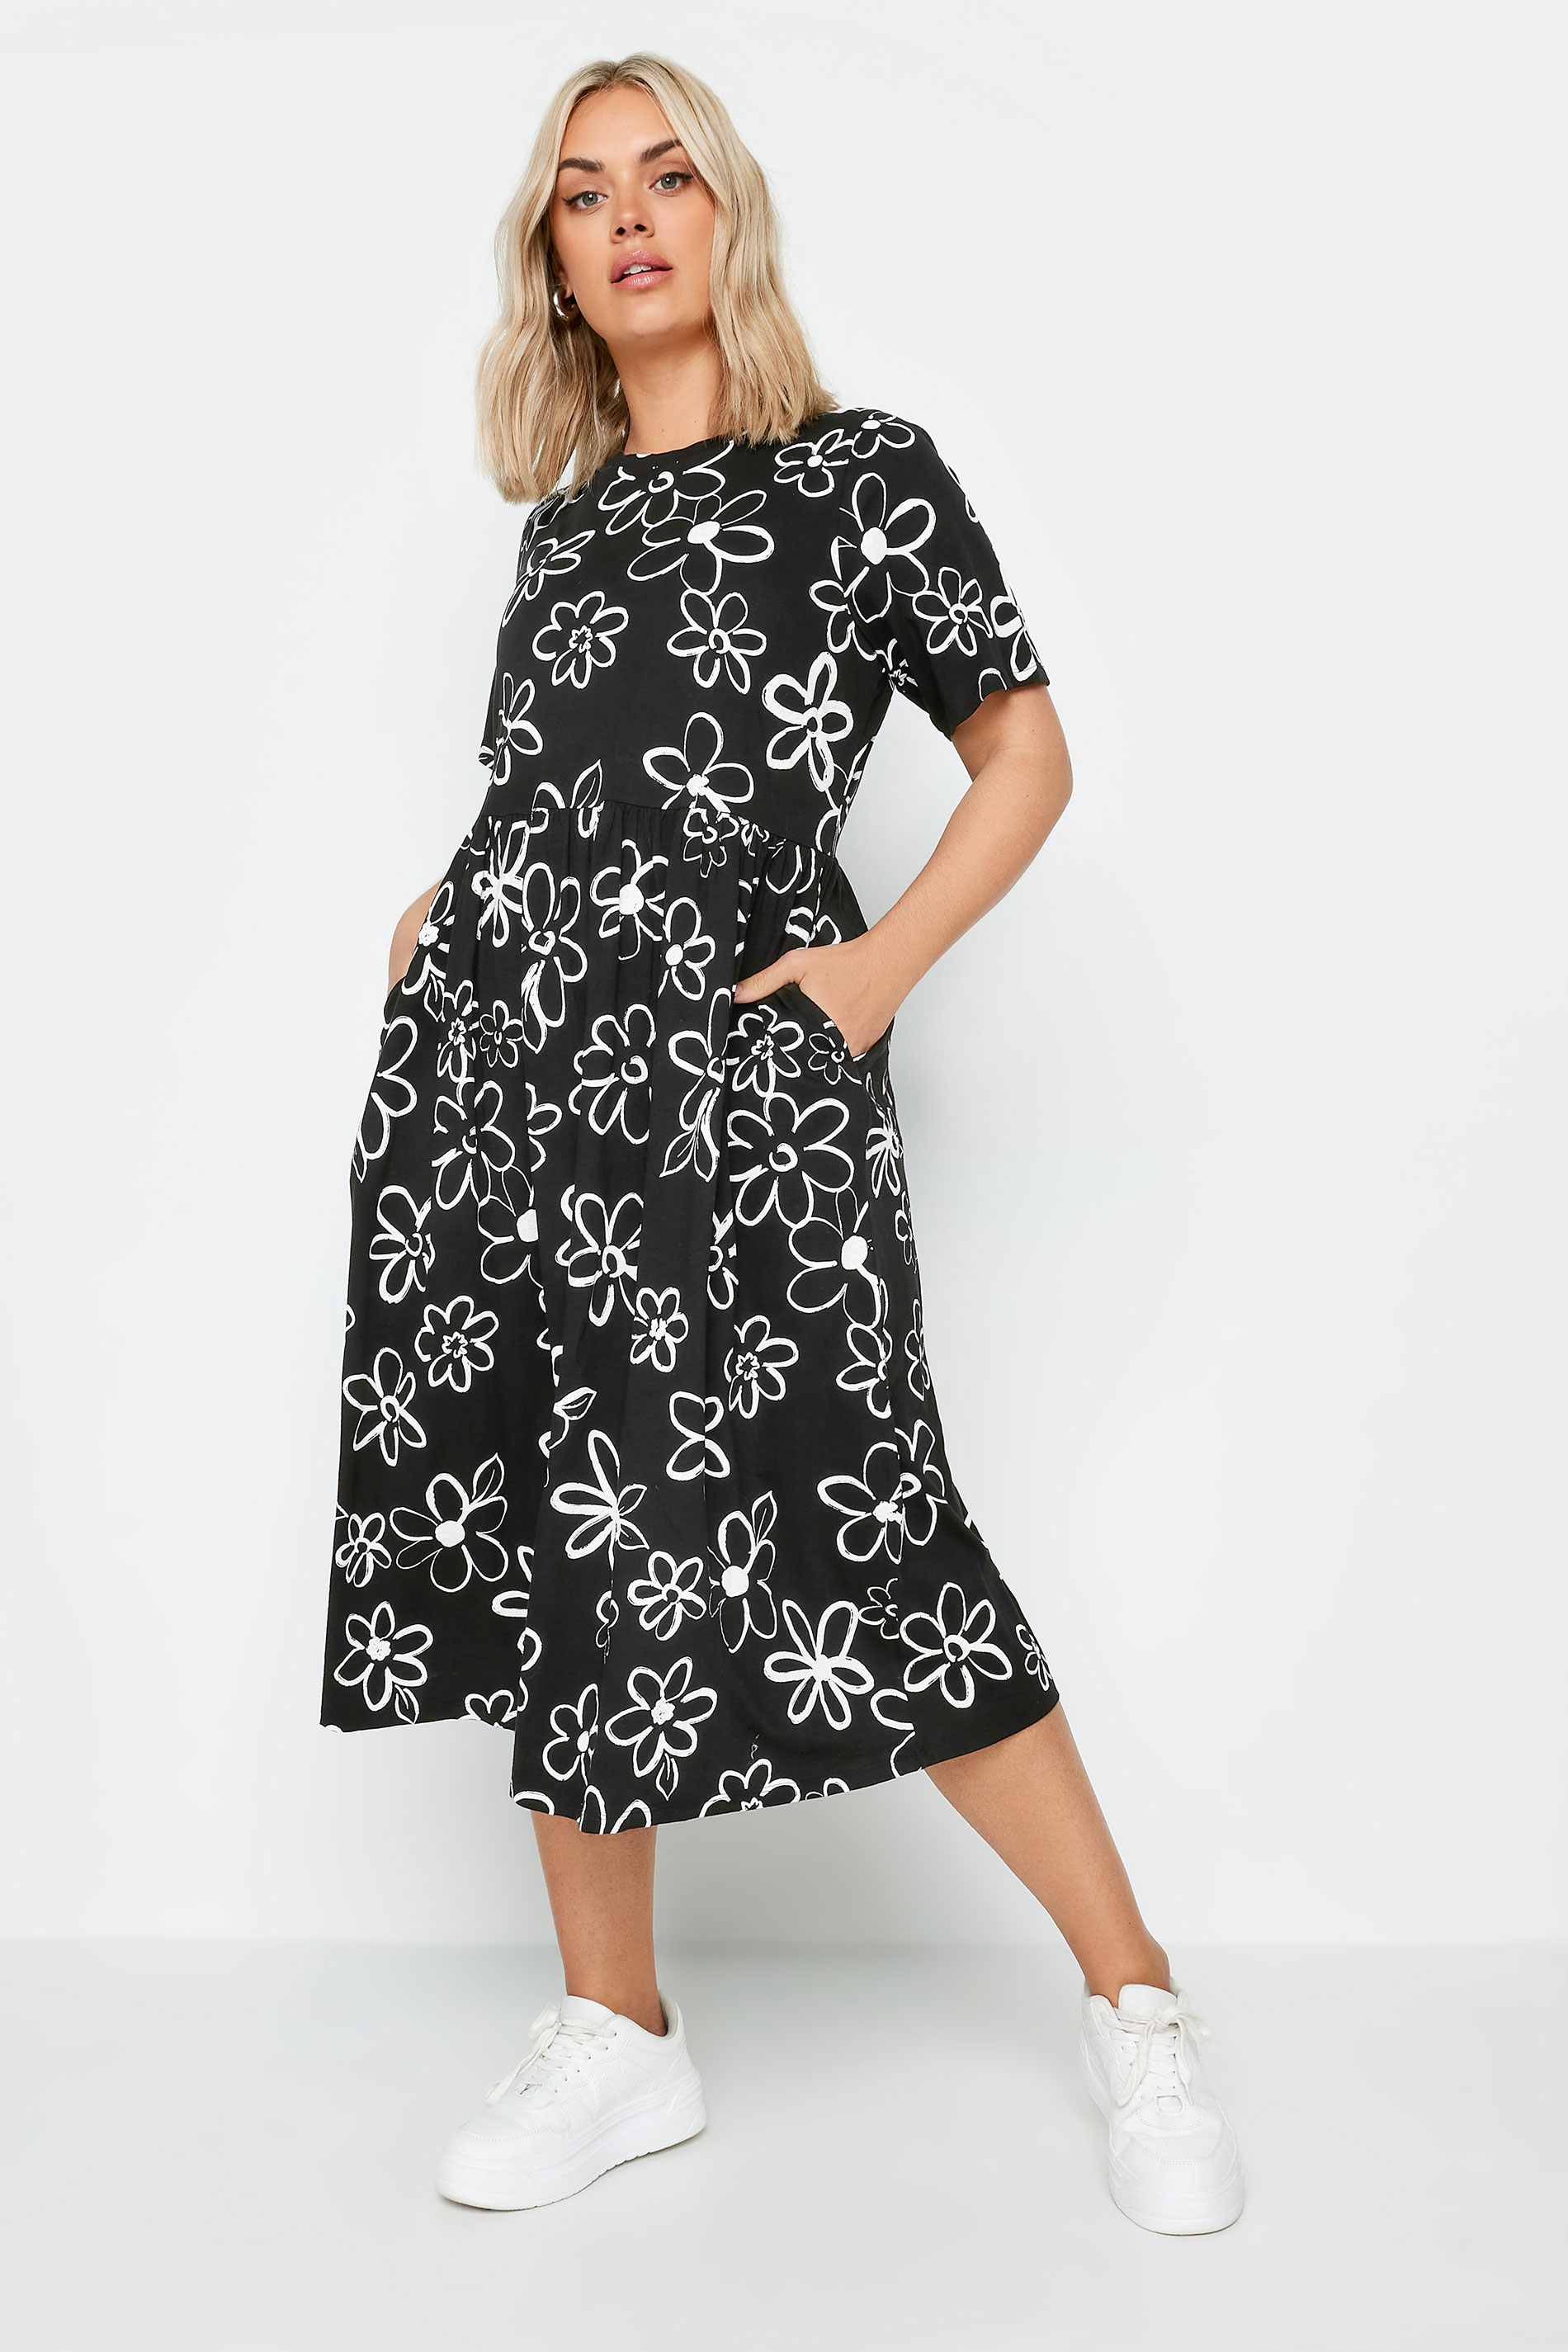 YOURS Plus Size Black Floral Doodle Print Pure Cotton Midaxi Dress | Yours Clothing 1